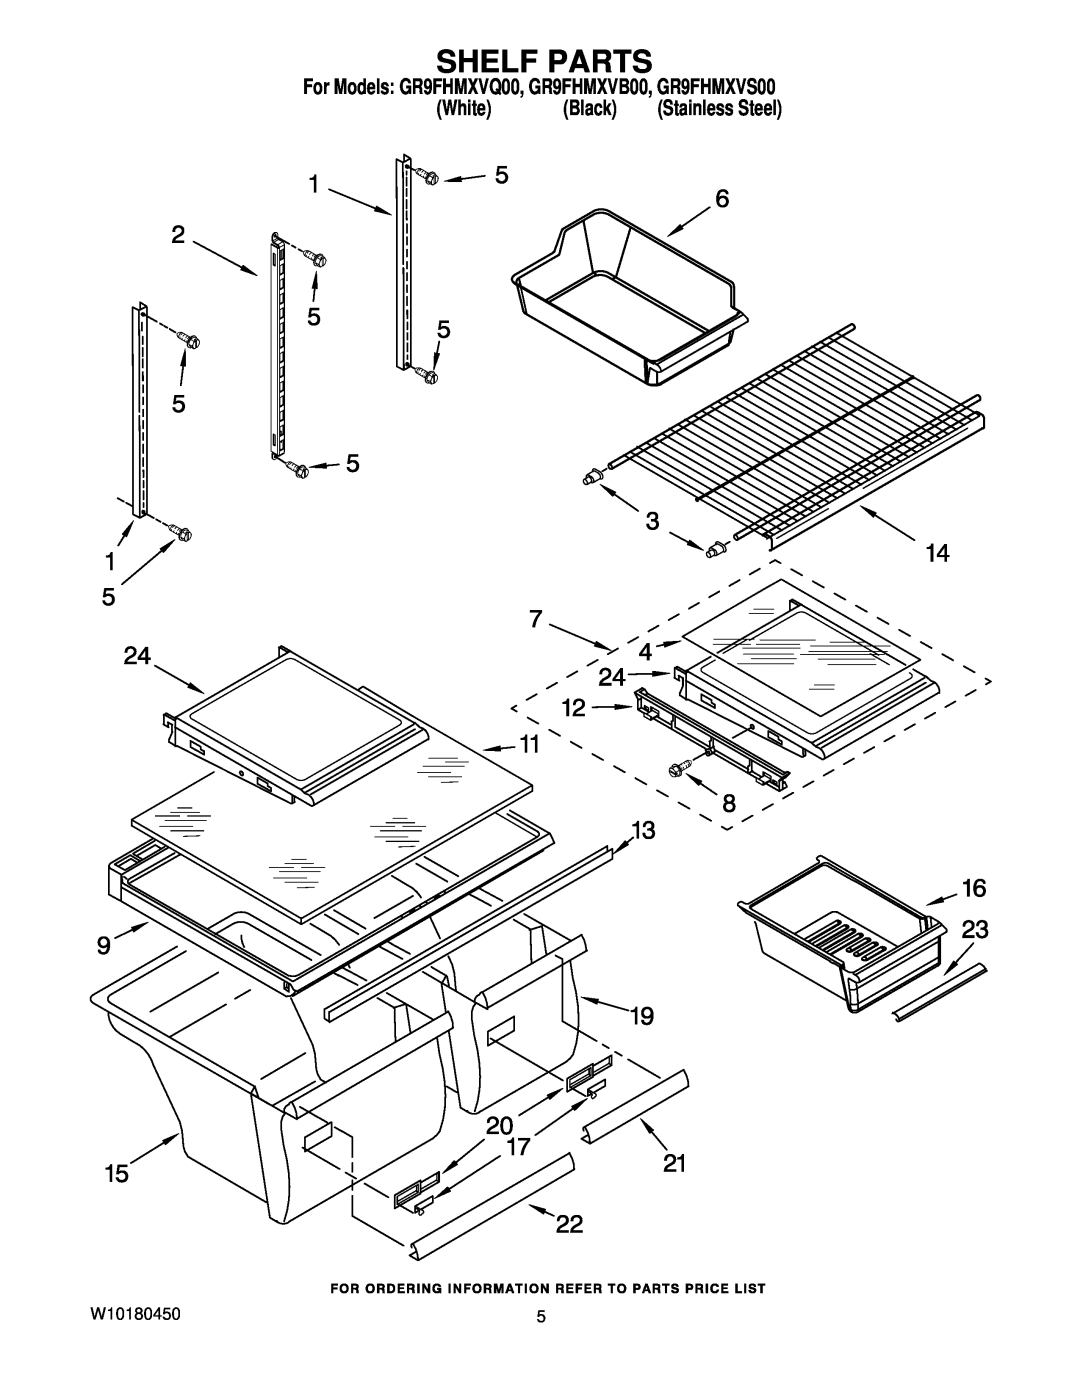 Whirlpool manual Shelf Parts, For Models GR9FHMXVQ00, GR9FHMXVB00, GR9FHMXVS00, White, Black, Stainless Steel 